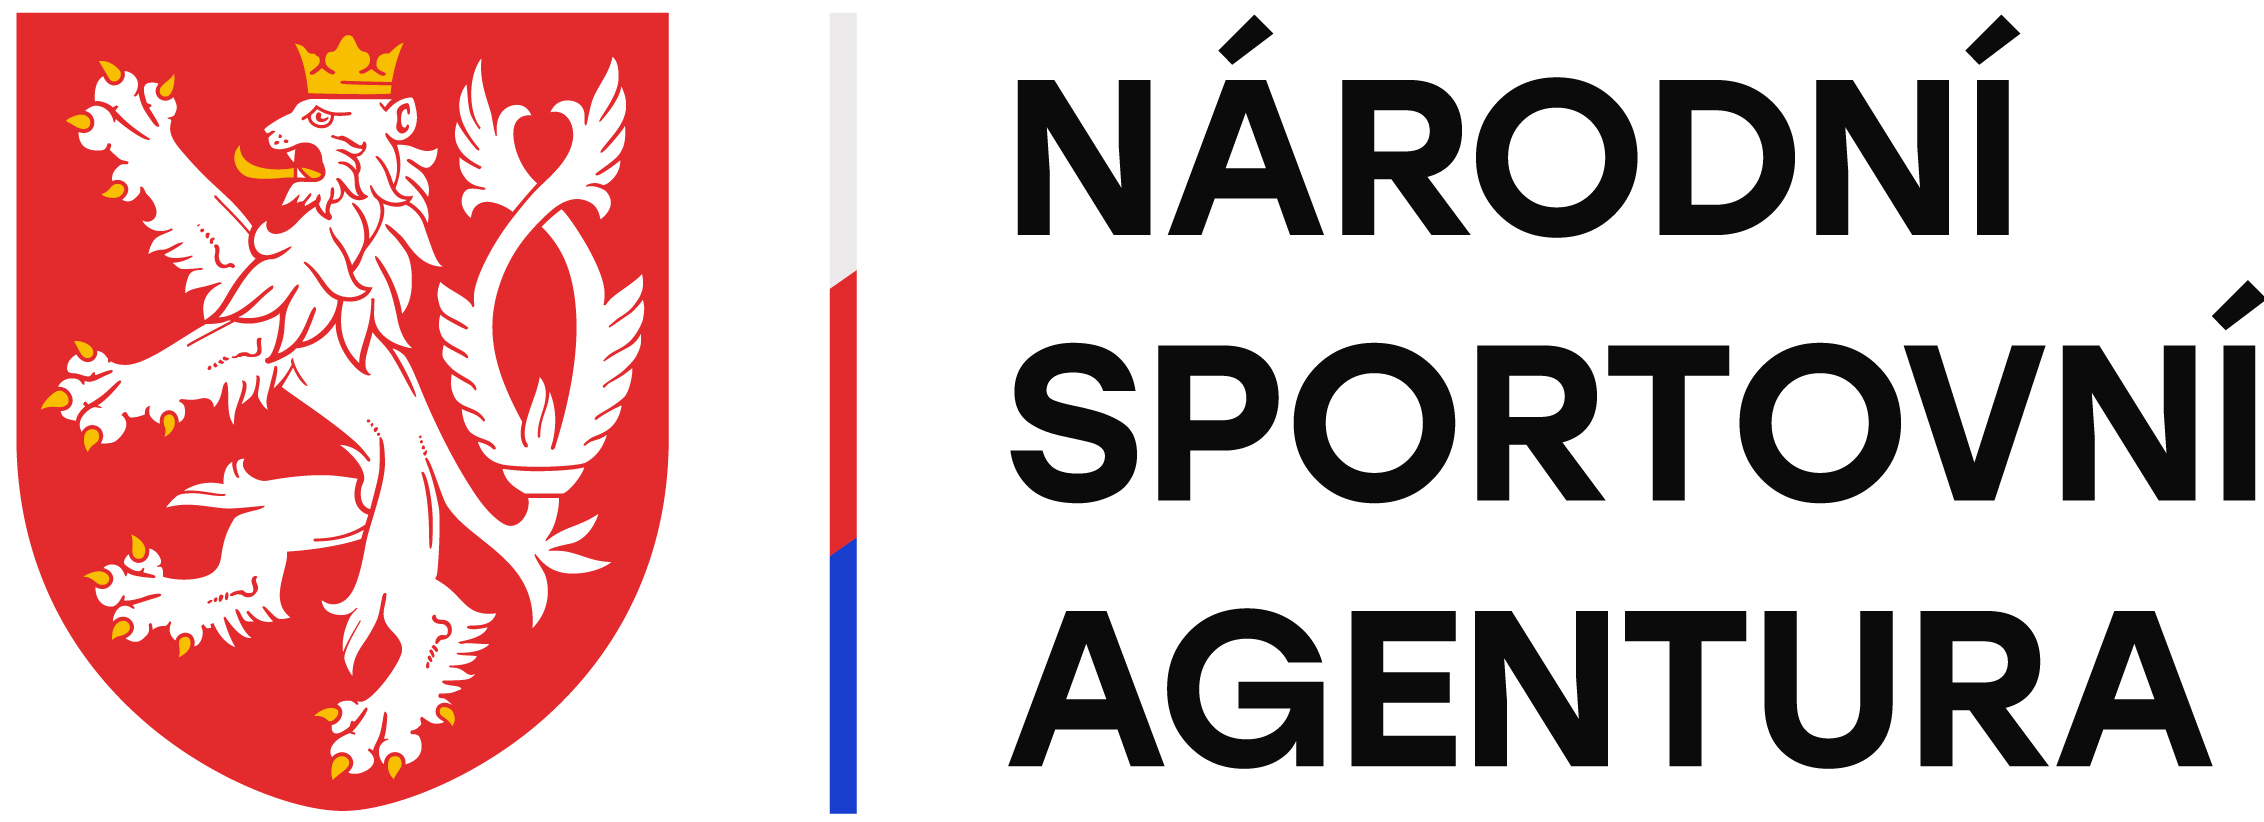 Narodni-sportovni-agentura_logo-rgb